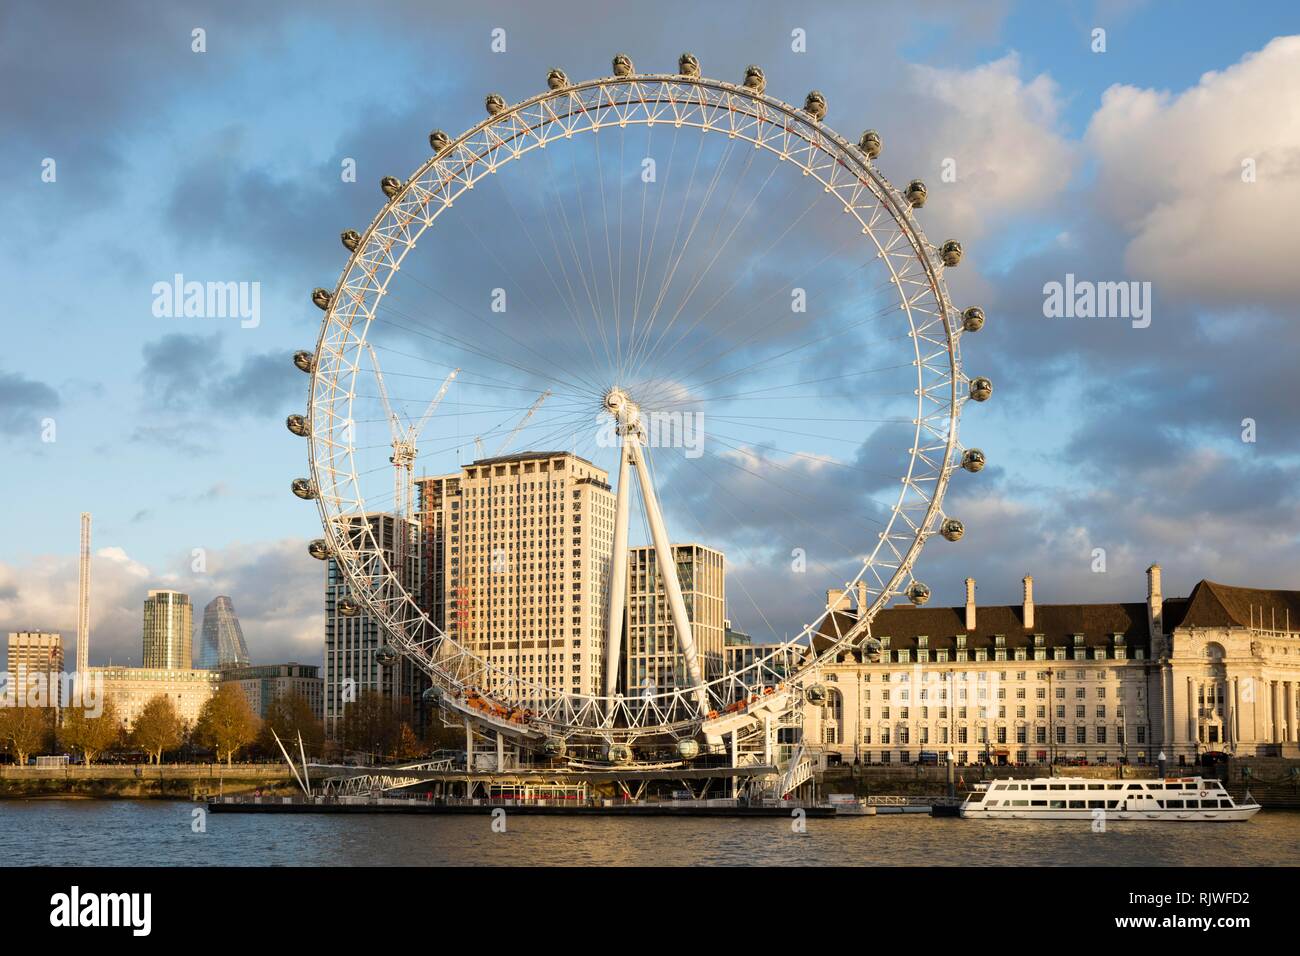 County Hall, London Eye, Ferris wheel, Thames, London, England, Great Britain Stock Photo